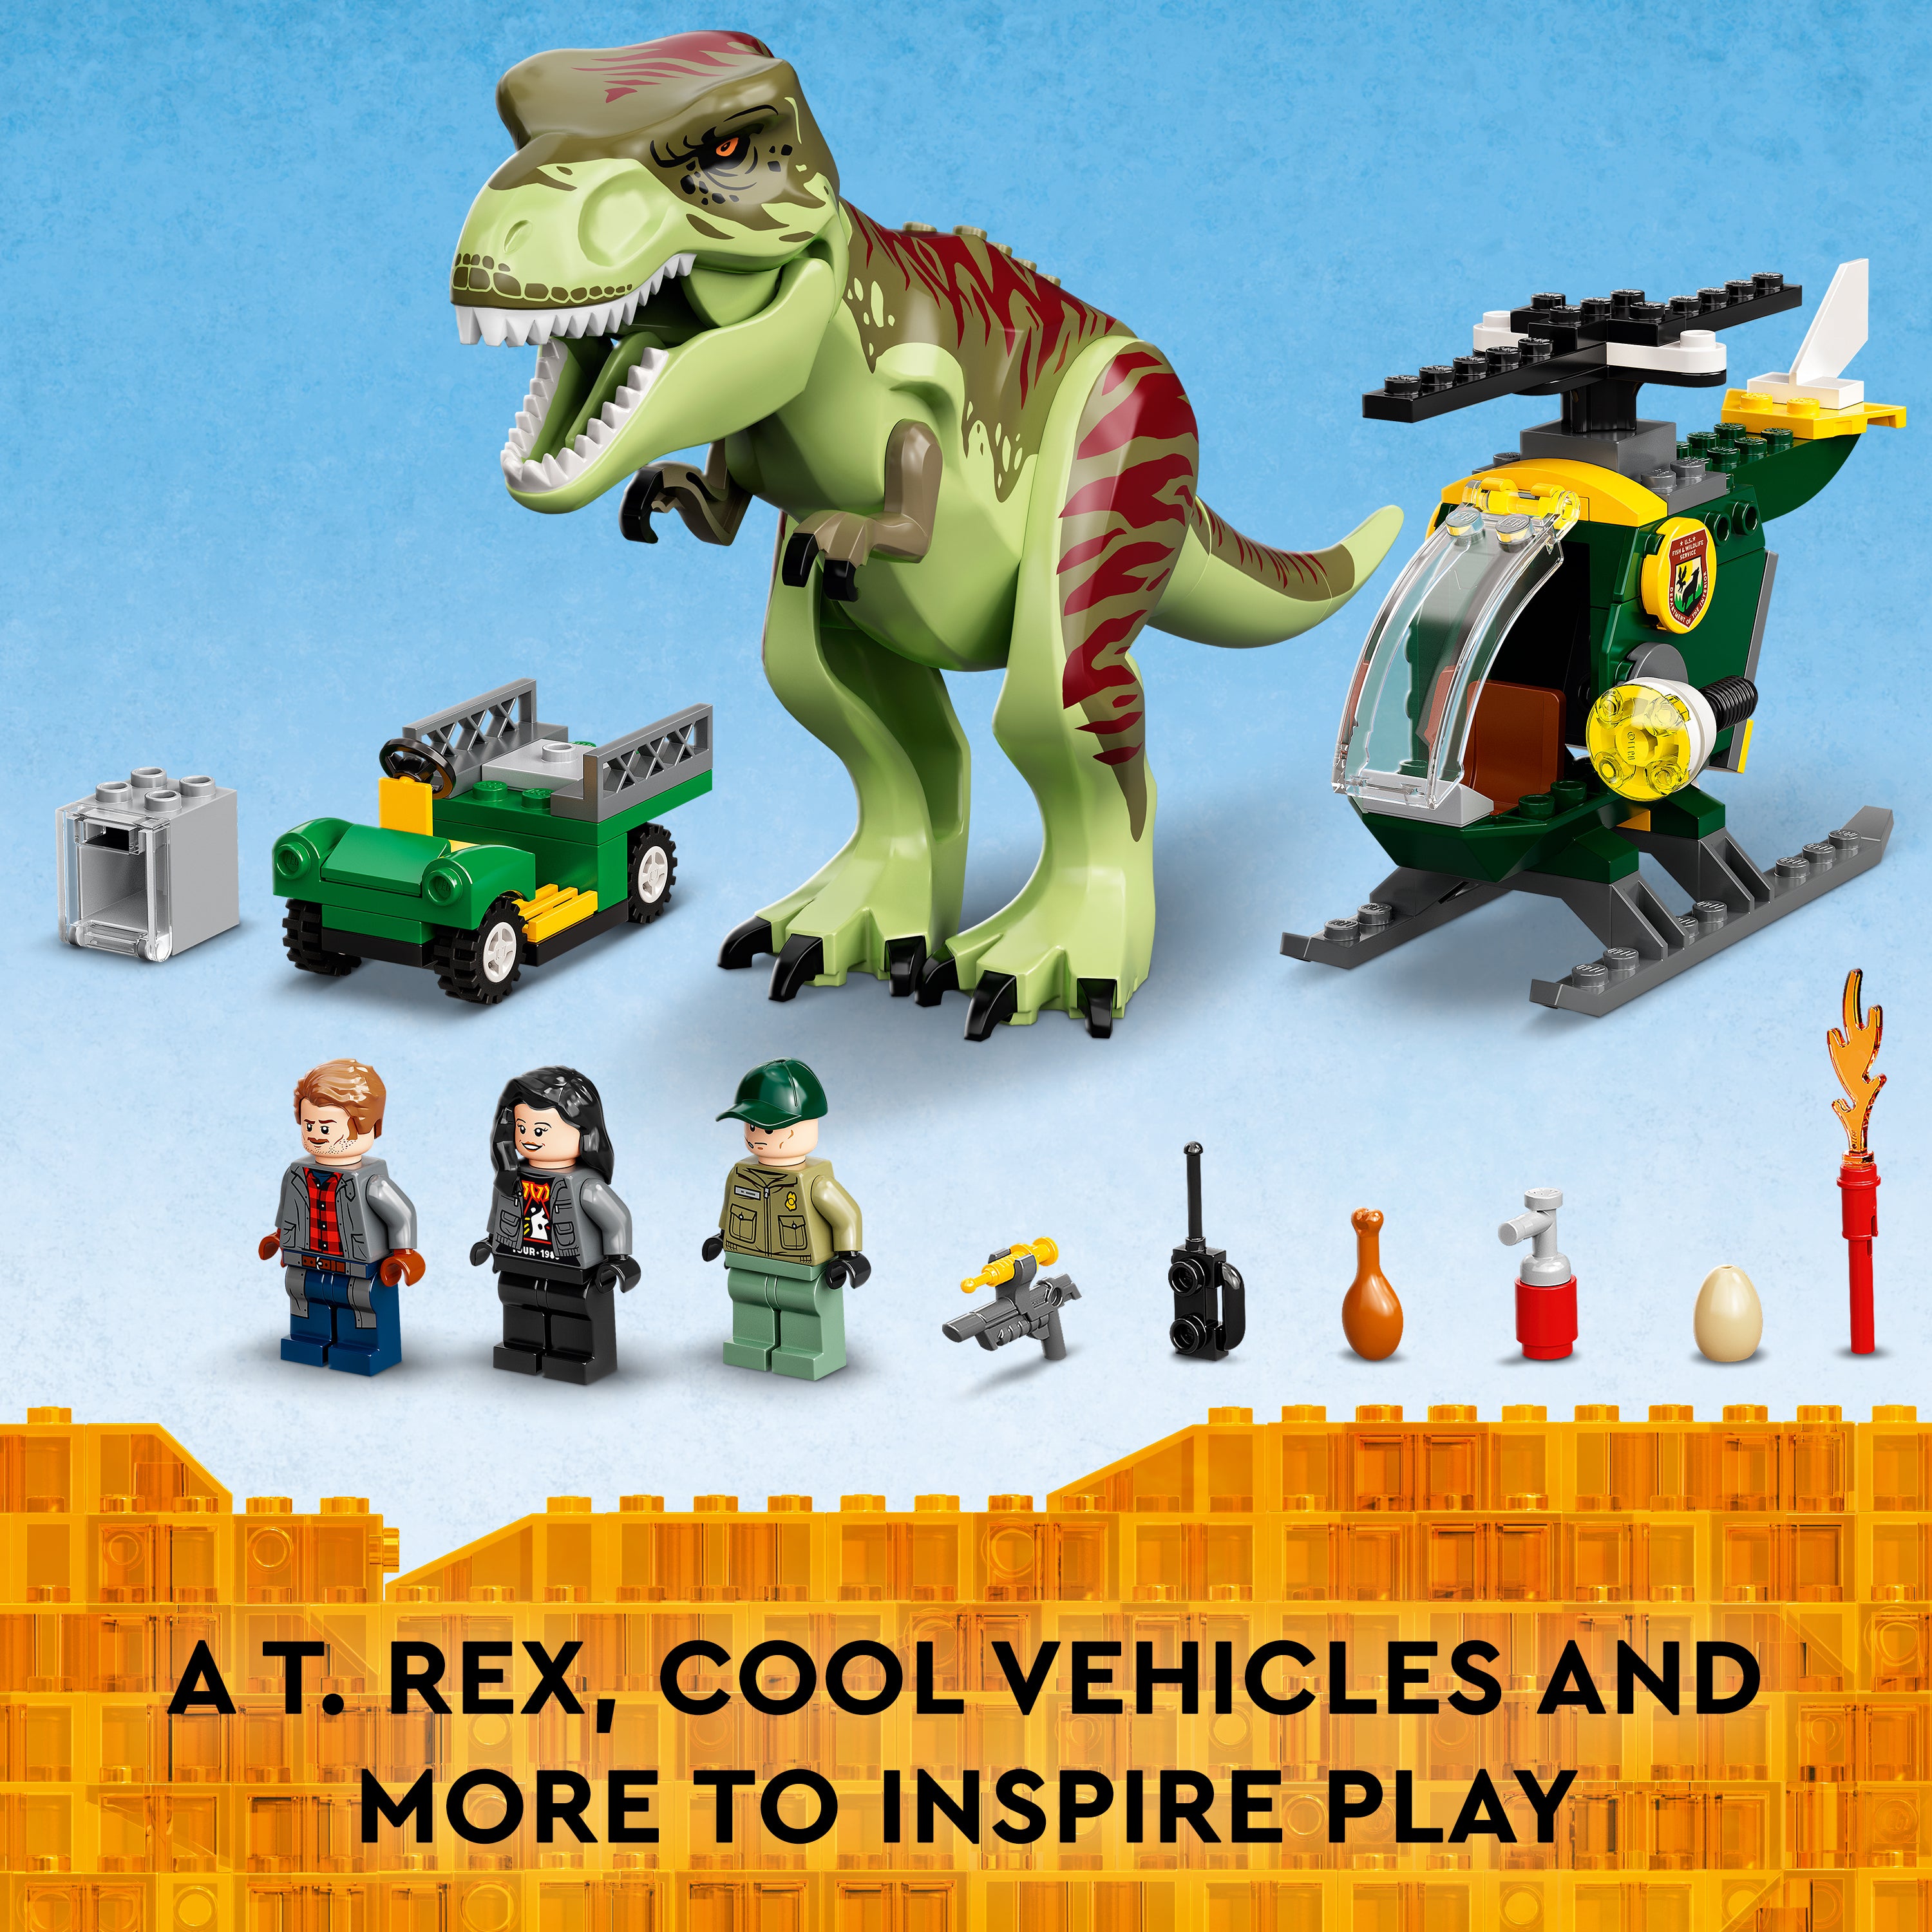 Lego 76944 T. rex Dinosaur Breakout